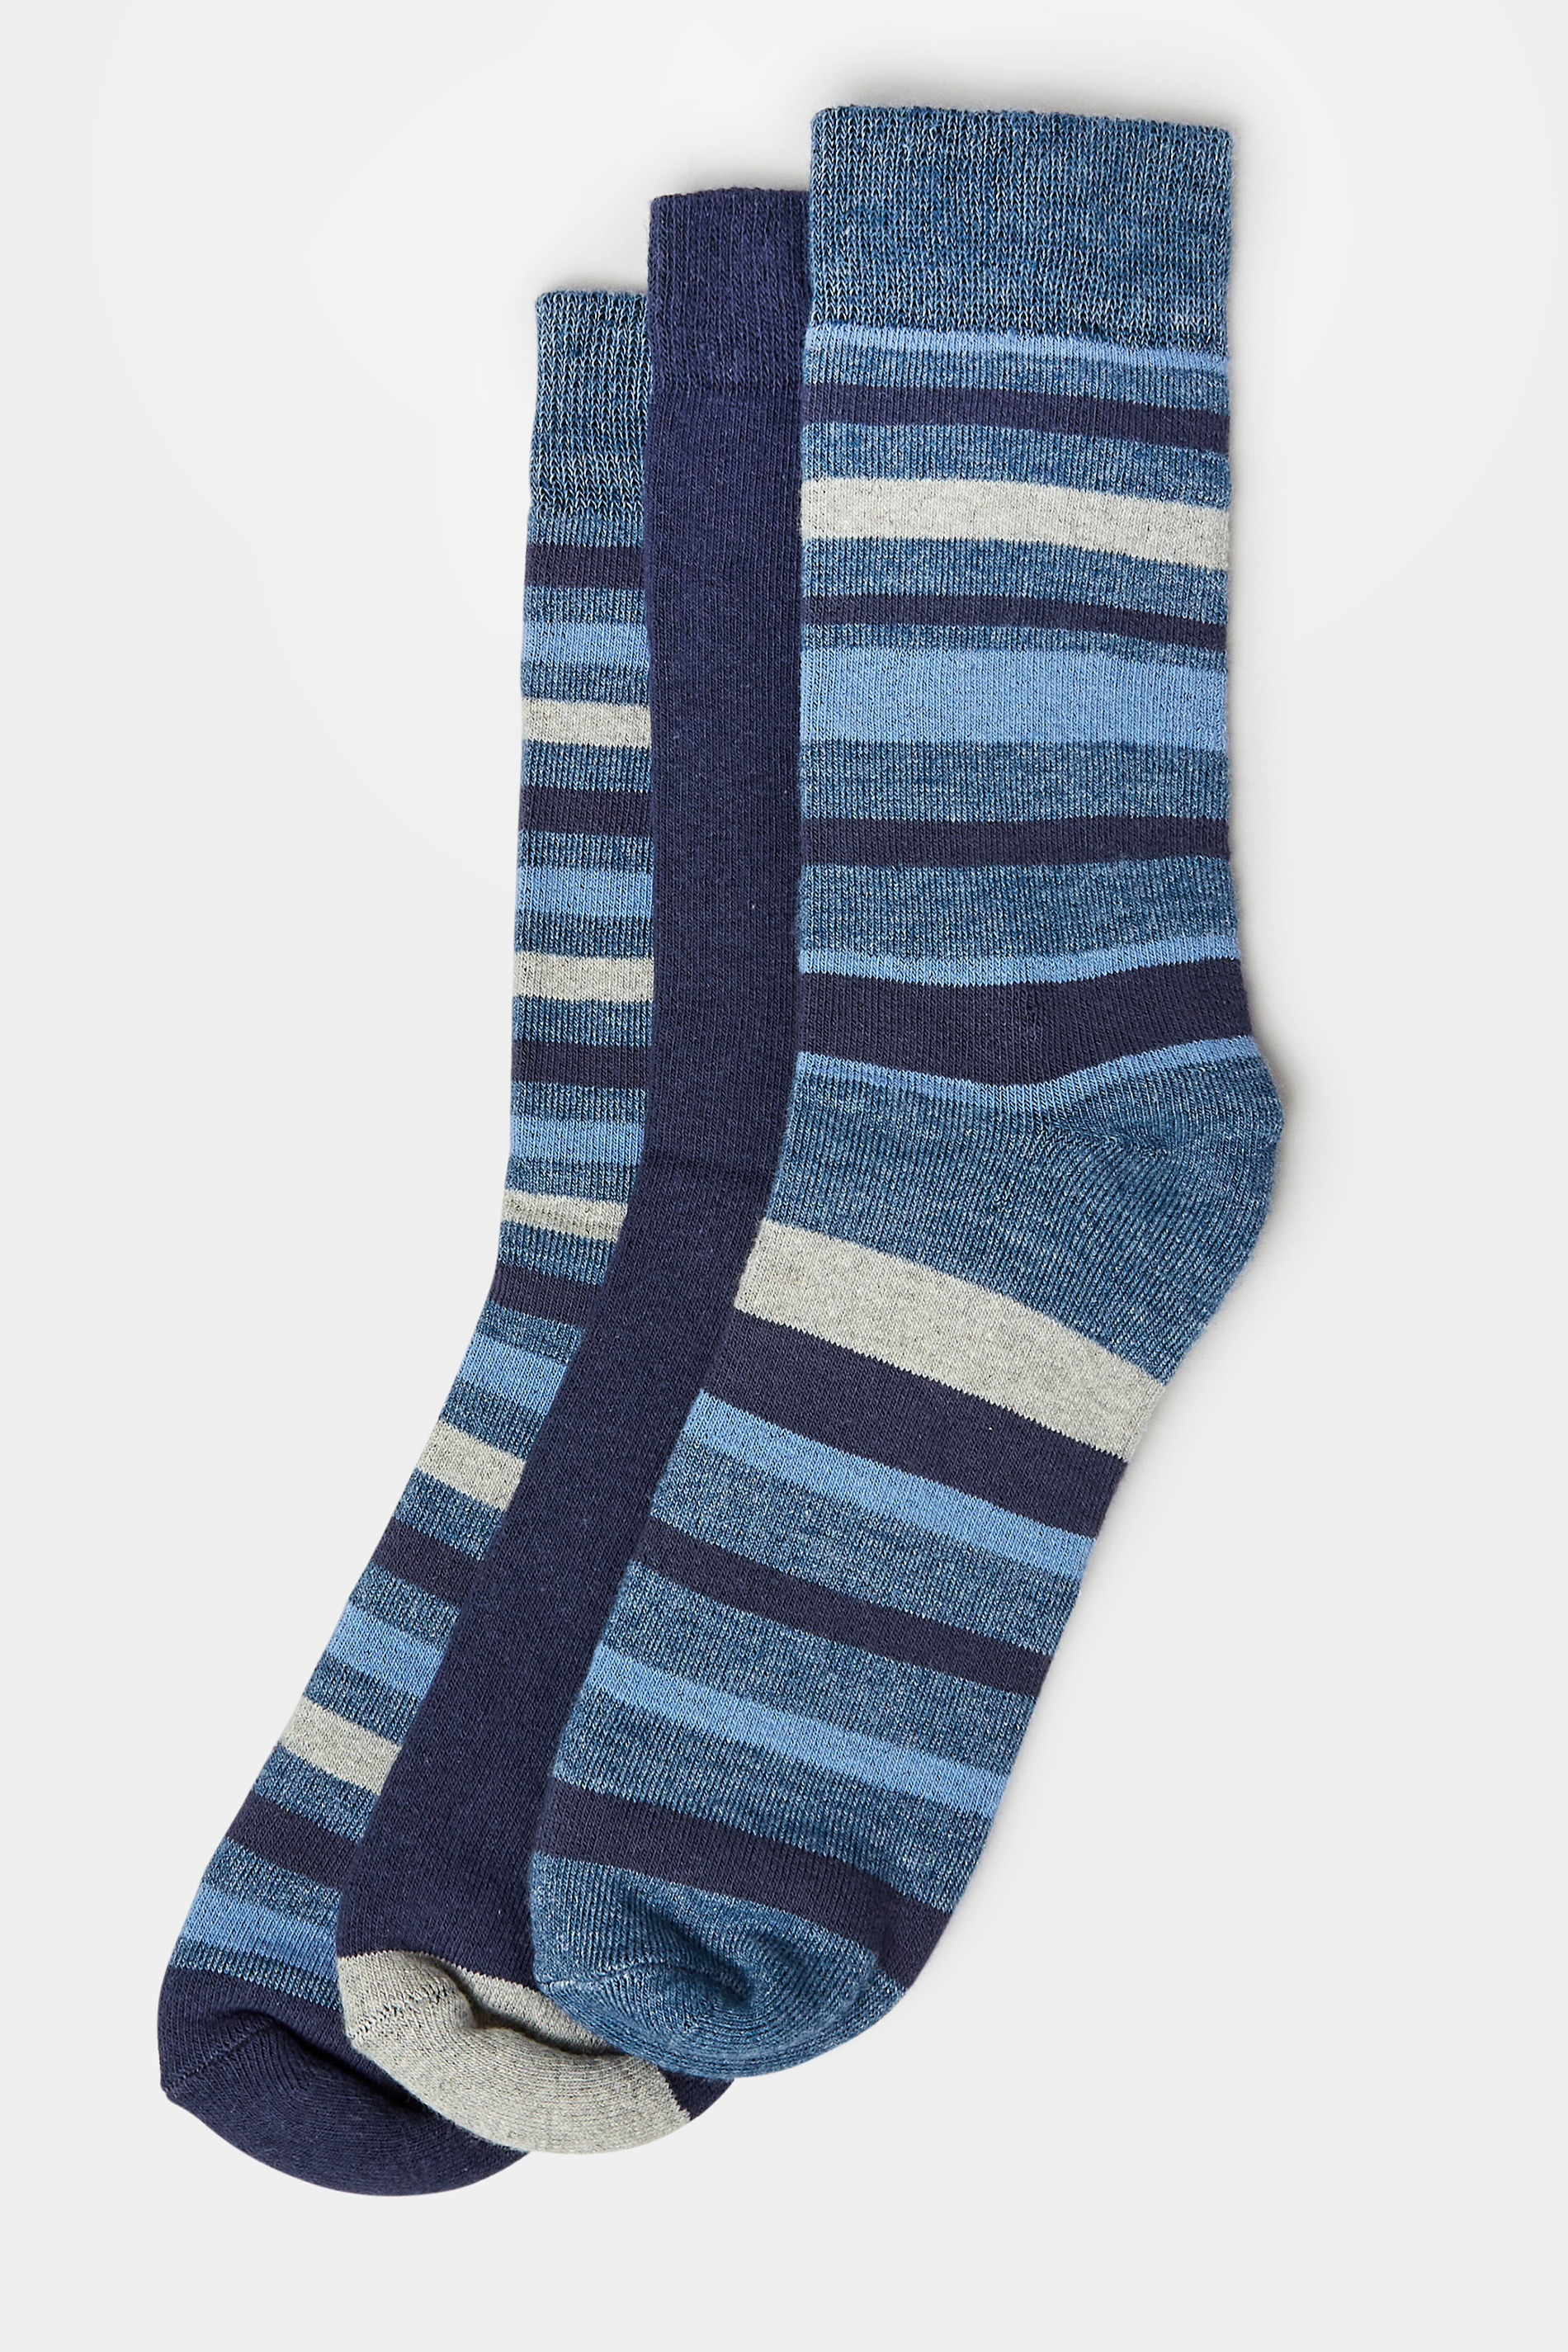 BadRhino Blue Striped 3 Pack Thermal Socks | BadRhino 3